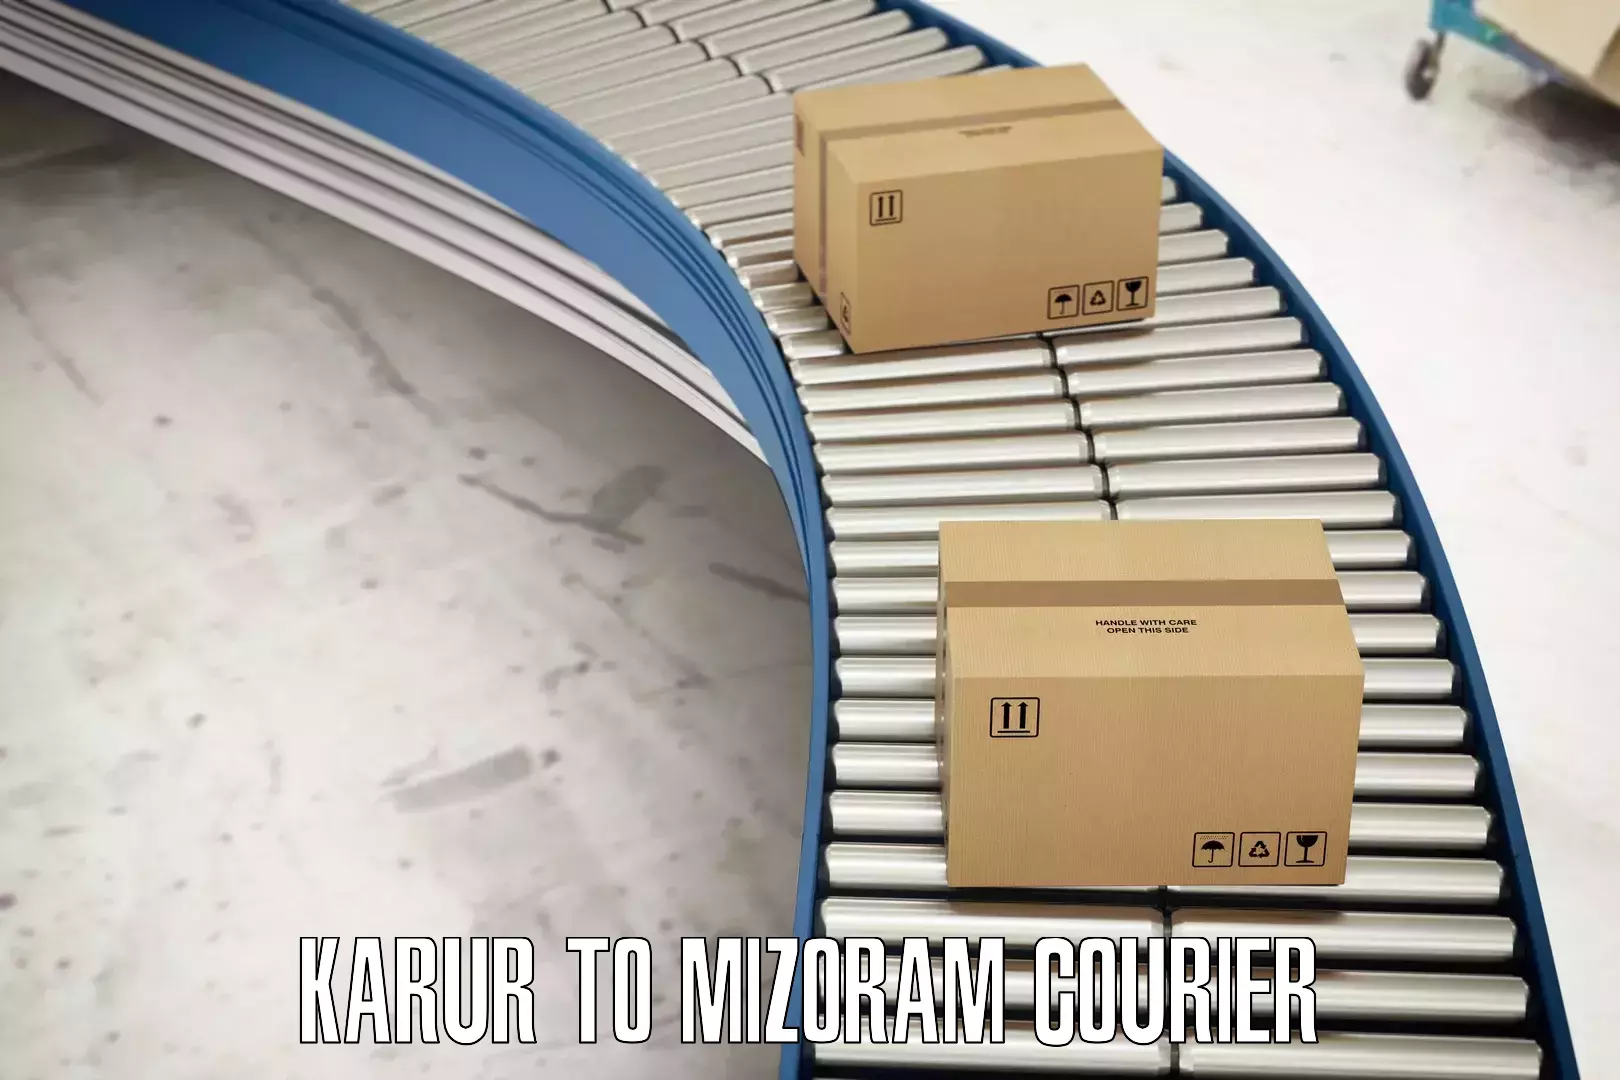 24/7 courier service Karur to Thenzawl